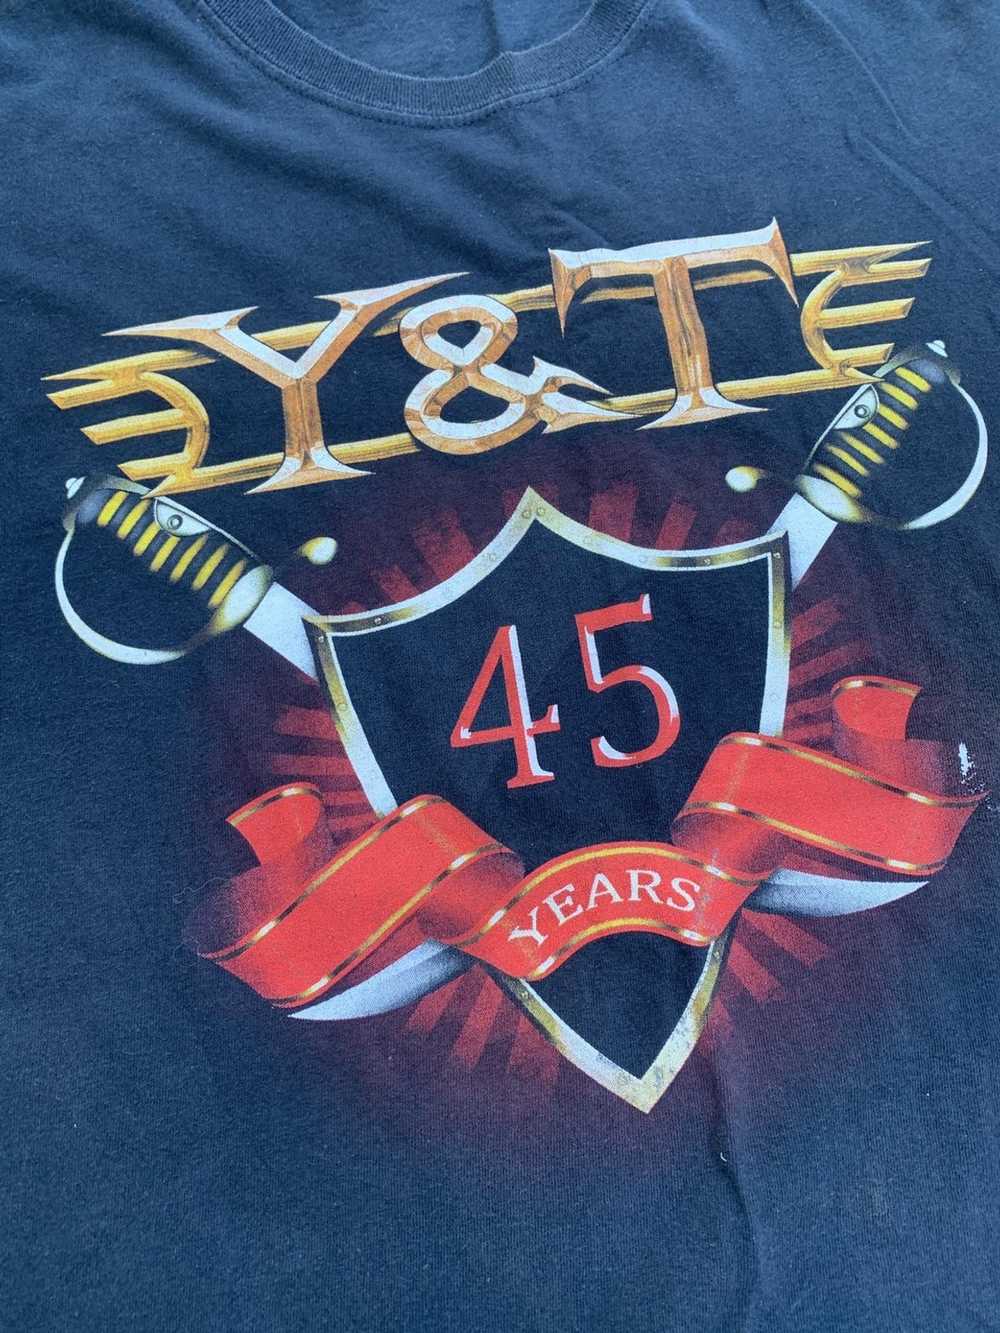 Vintage 2019 Y&R 45 years reunion concert - image 1